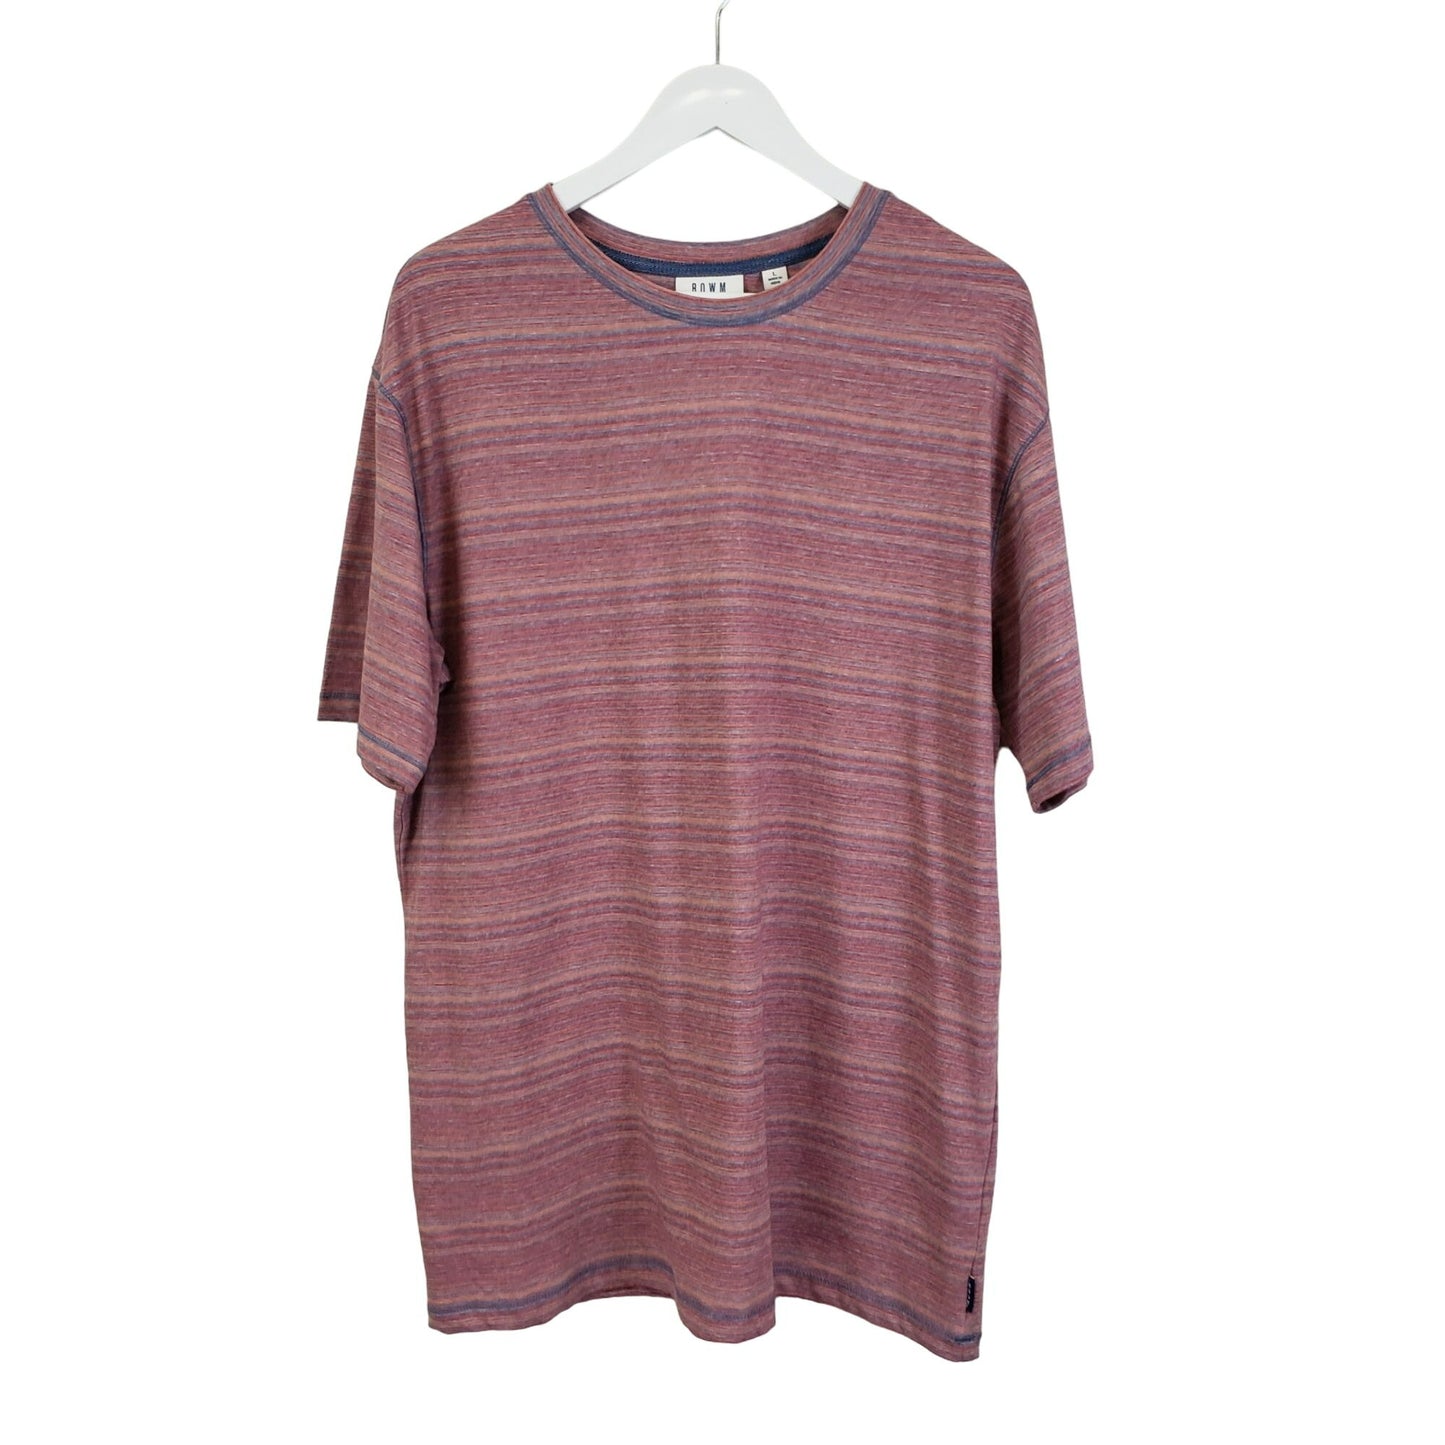 NWT ROWM Striped Short Sleeve T-Shirt Size Large